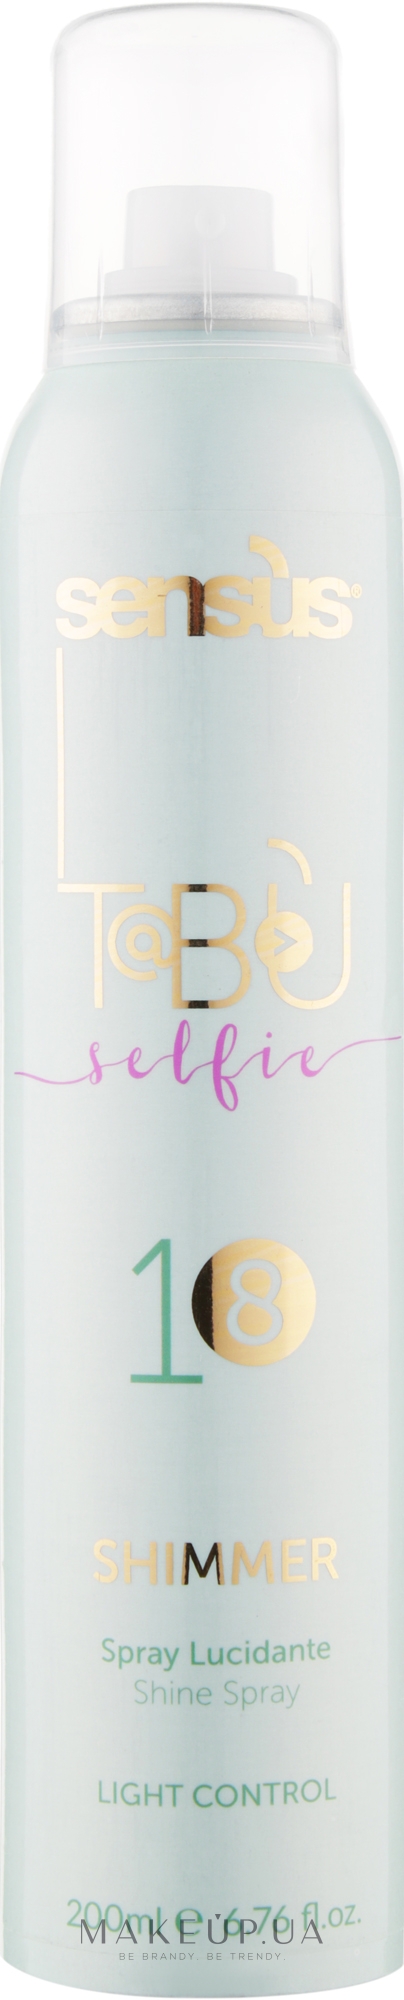 Спрей для блеска волос - Sensus Tabu Shimmer 18 — фото 200ml